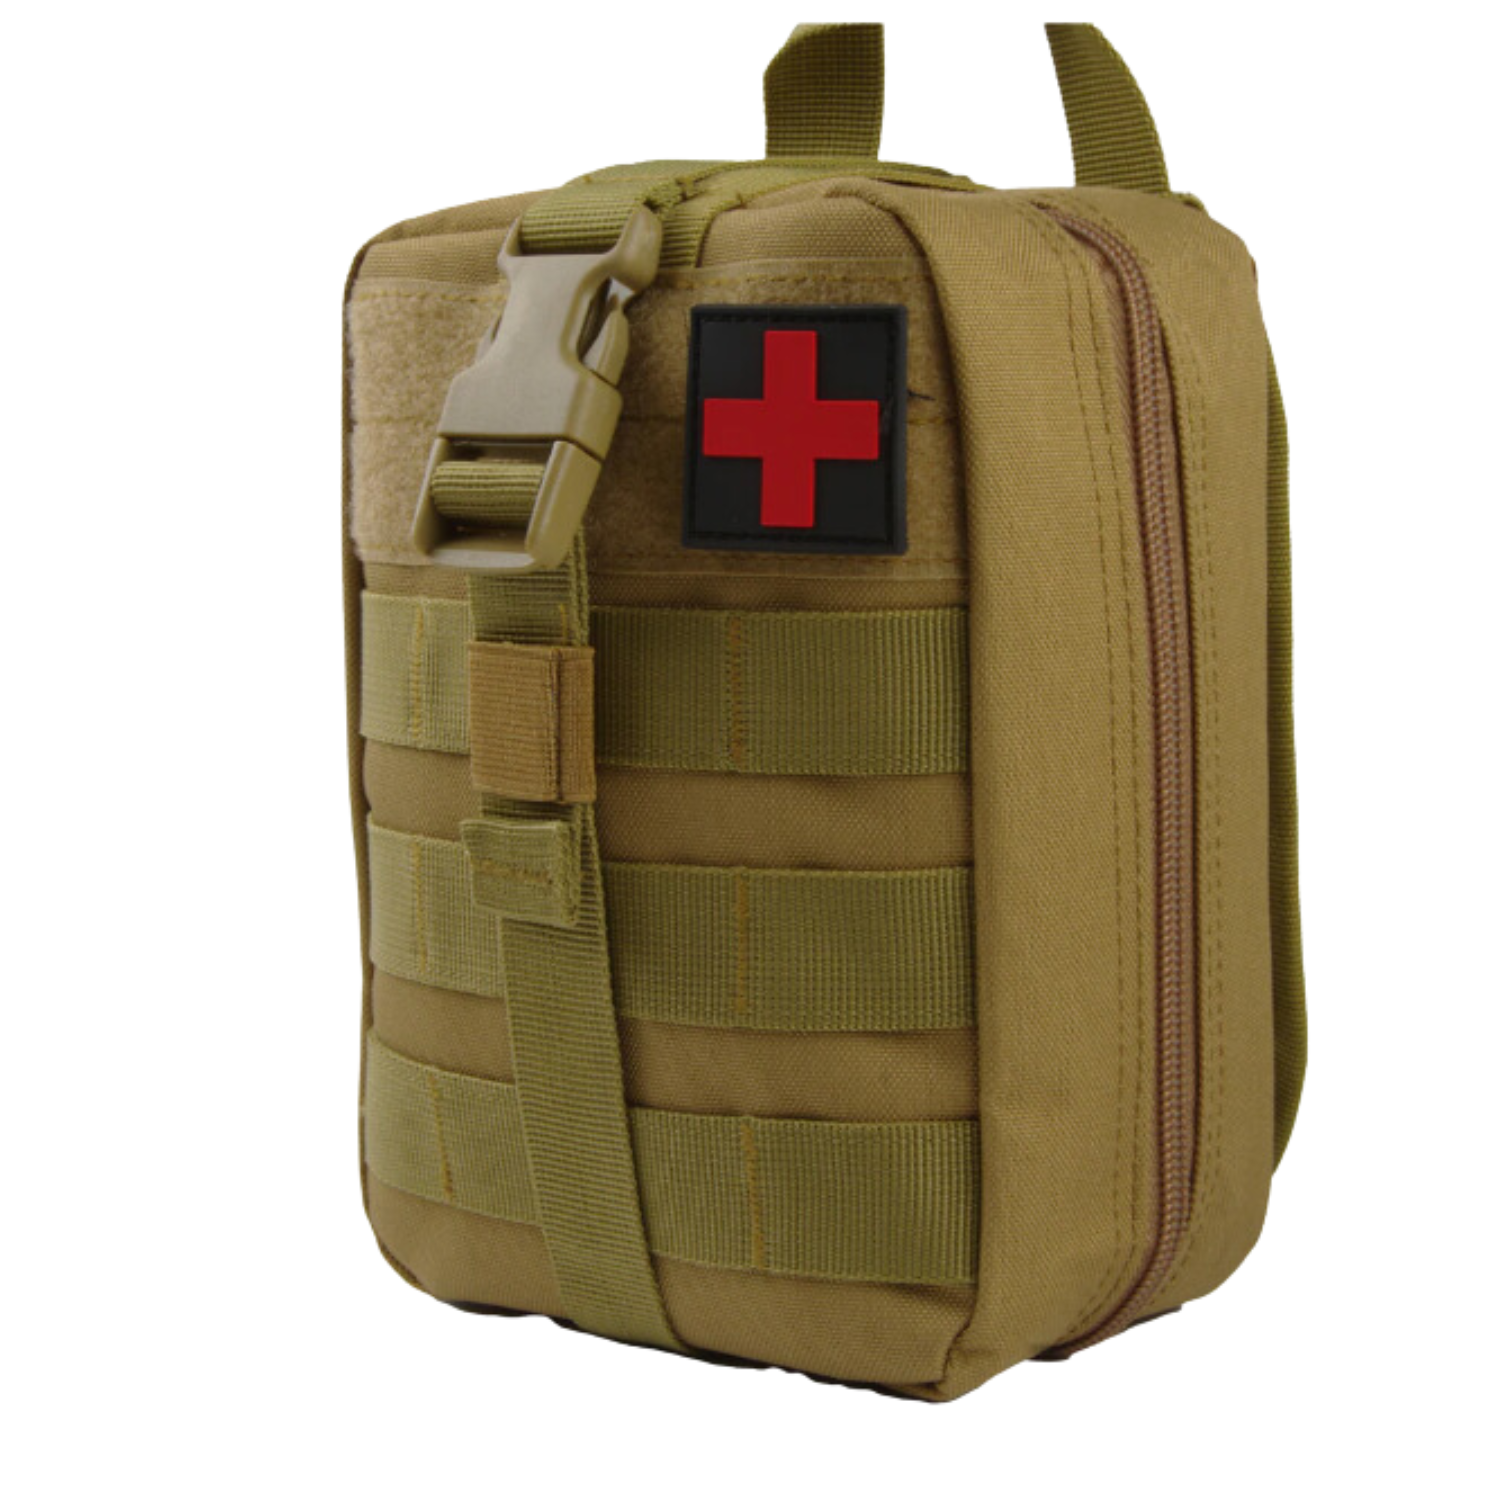 First Aid Trauma Tactical Kit Bag Emergency / SURVIVAL